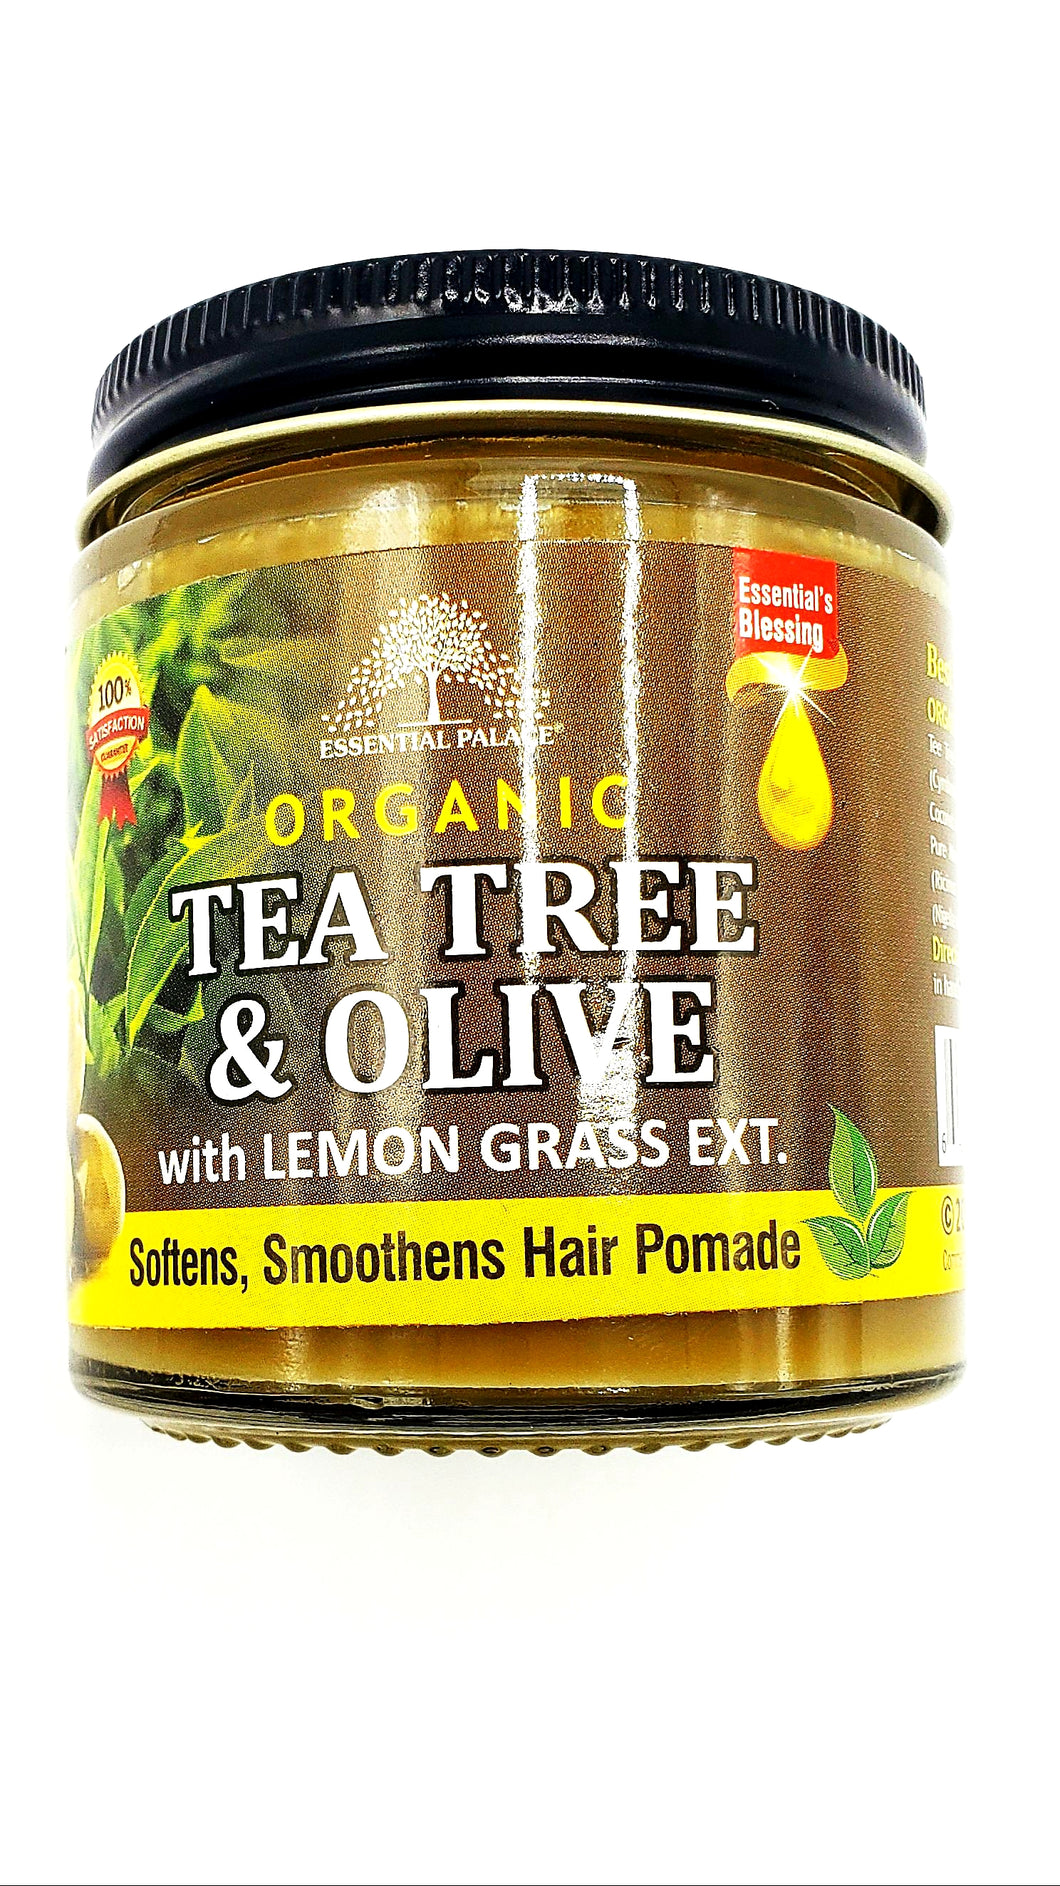 Essential Palace Organic Tea Tree Oil & Olive Oil Hair Pomade